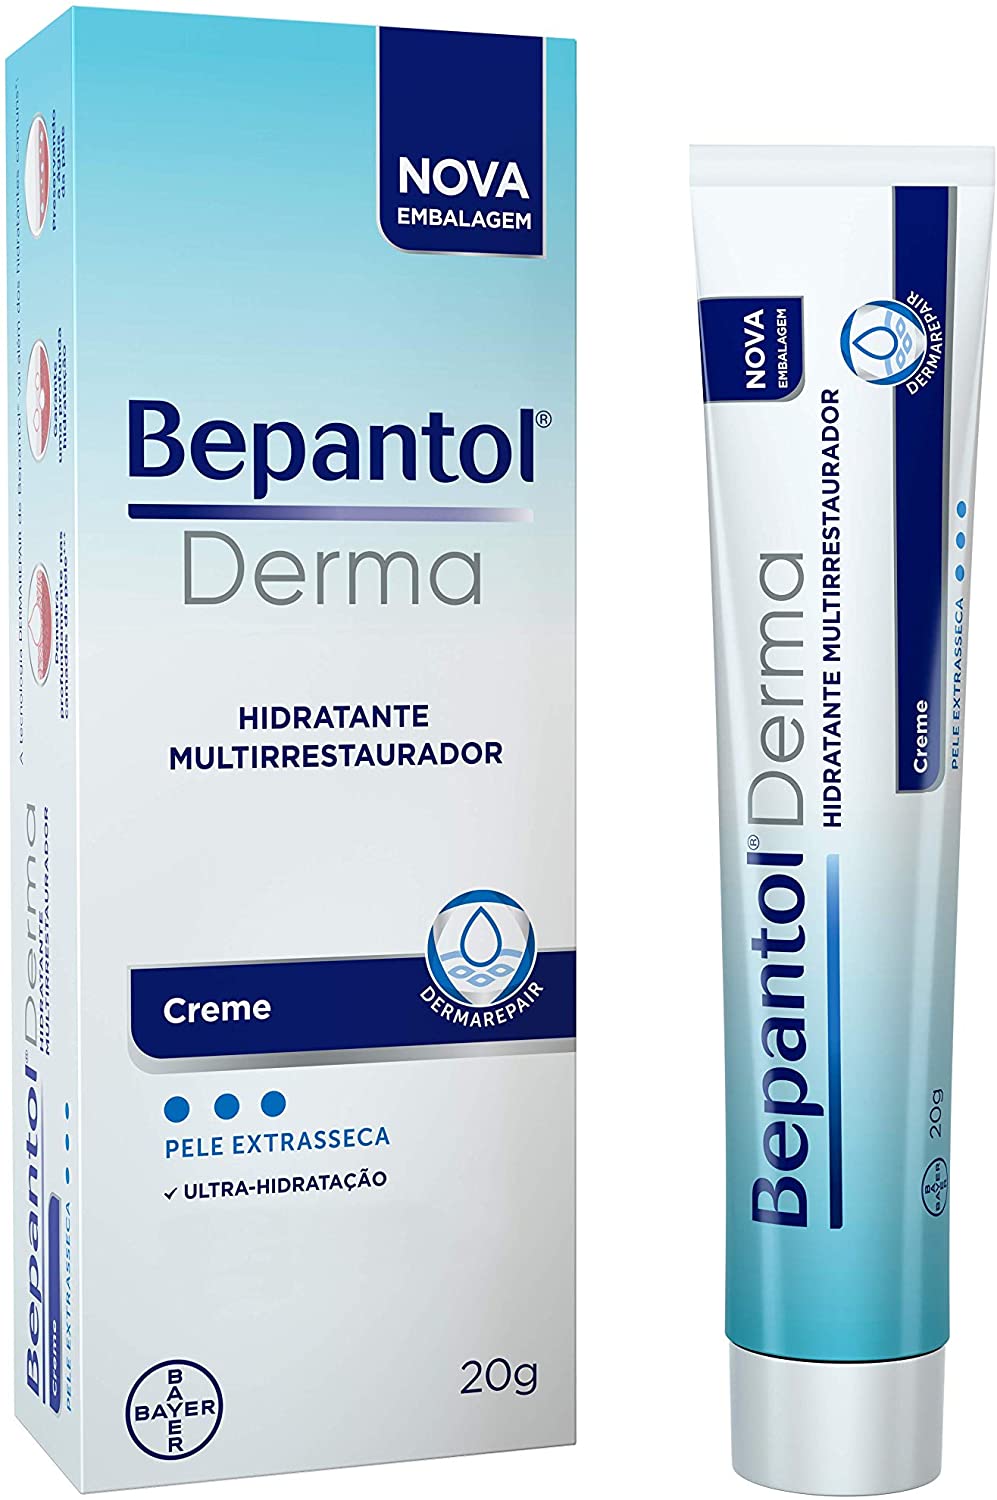 [Exclusivo Prime] Bepantol Derma Creme Hidratante para Pele Extrasseca 20g, Bepantol Derma